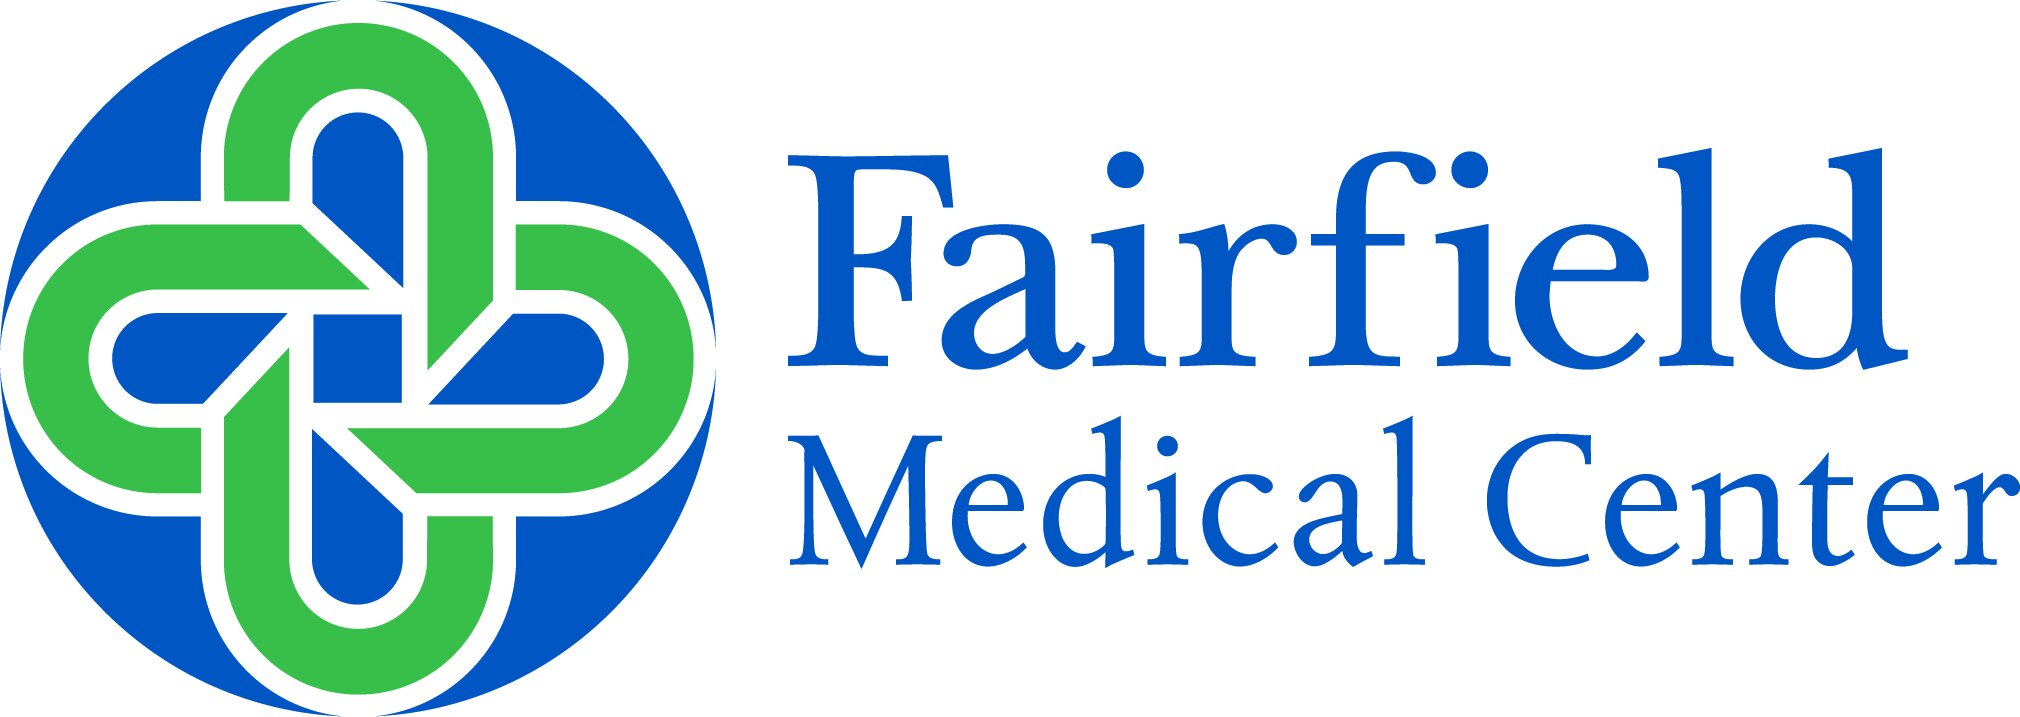 FMC logo (2).jpg